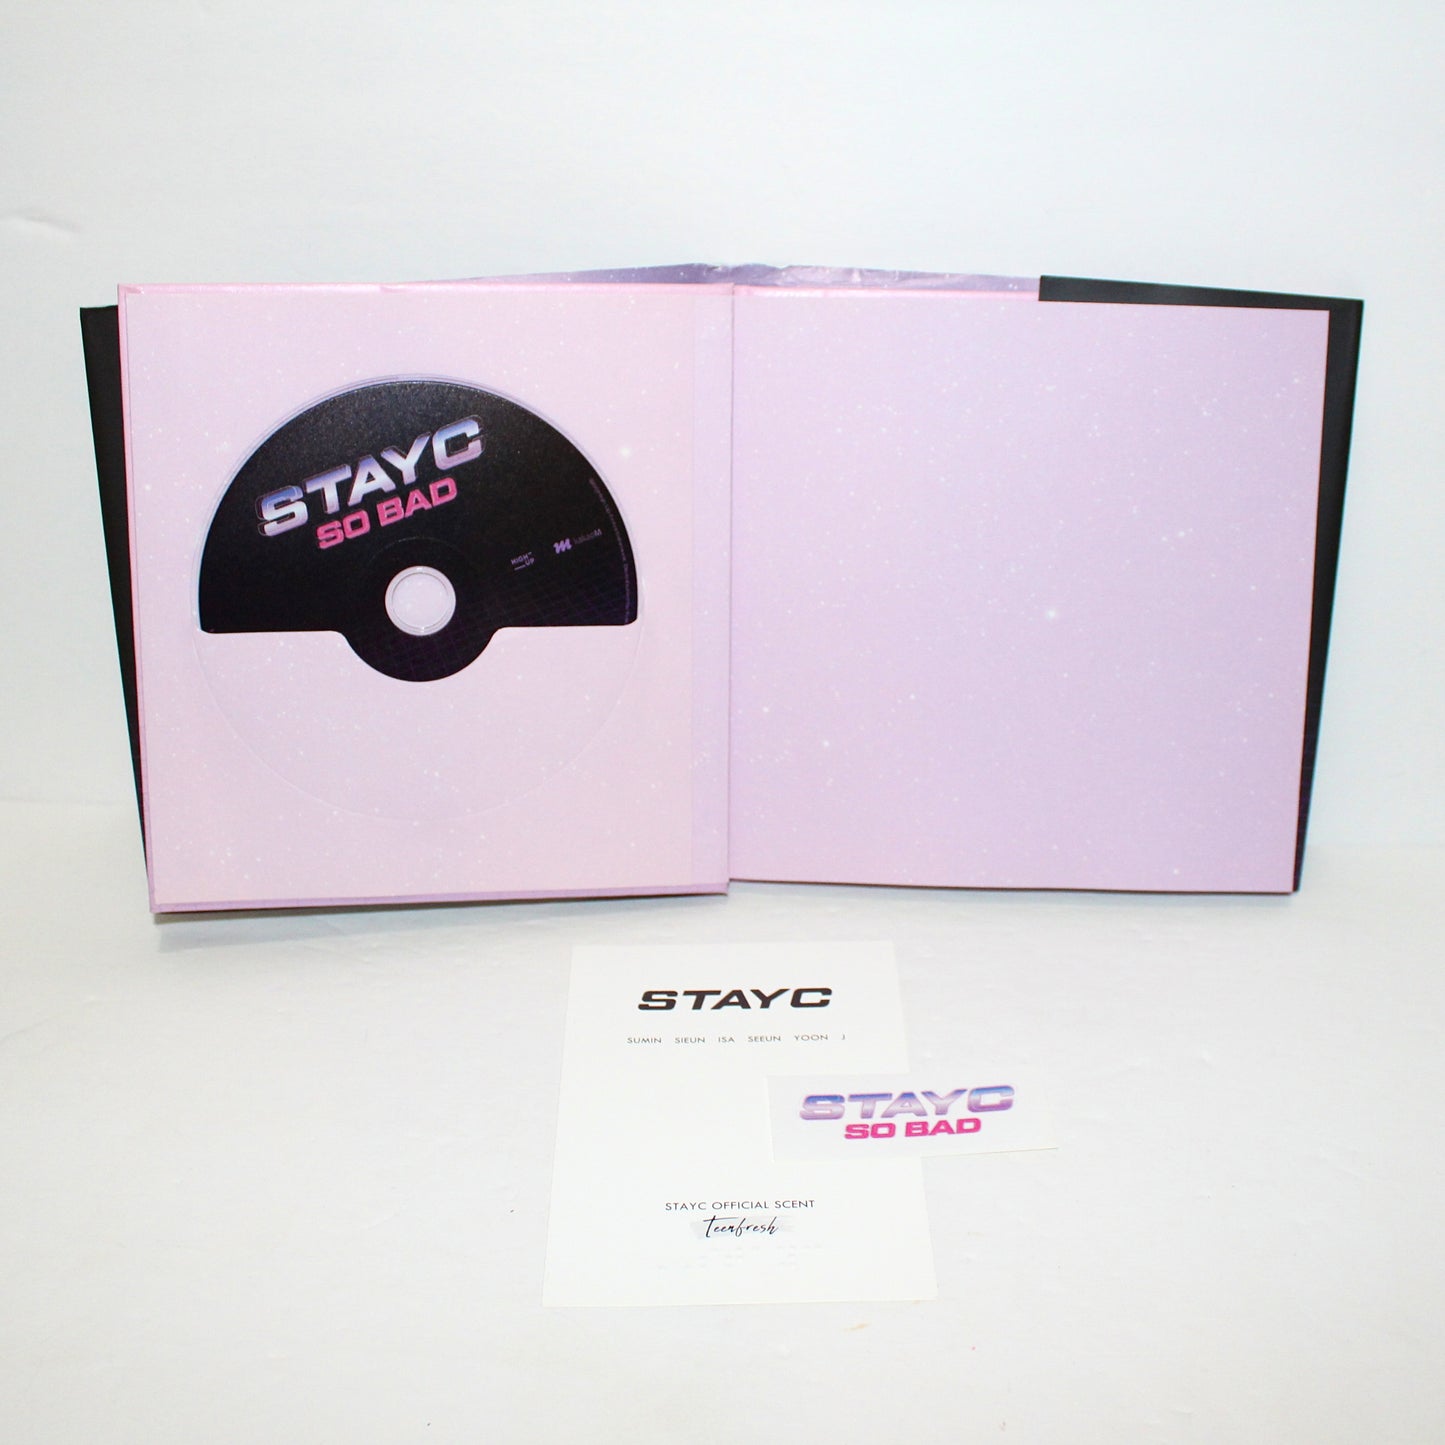 STAYC 1st Single Album: So Bad